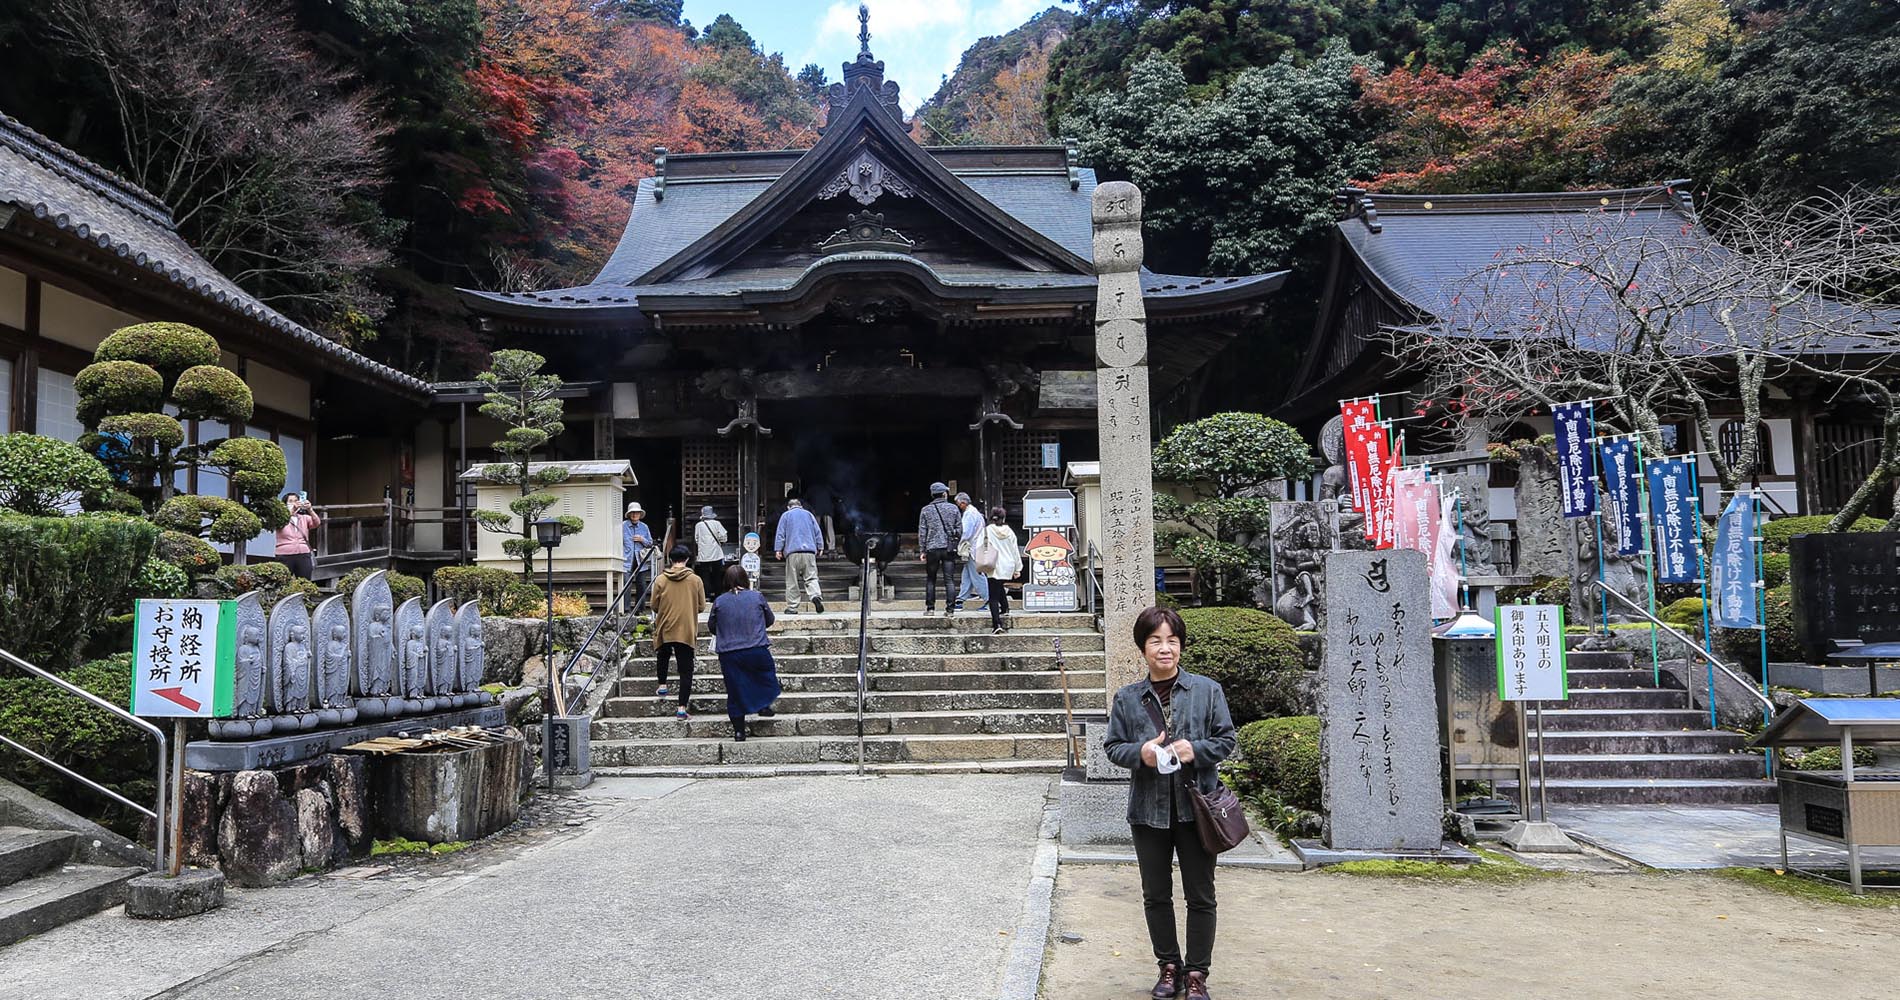 Temple principal de Okuboji